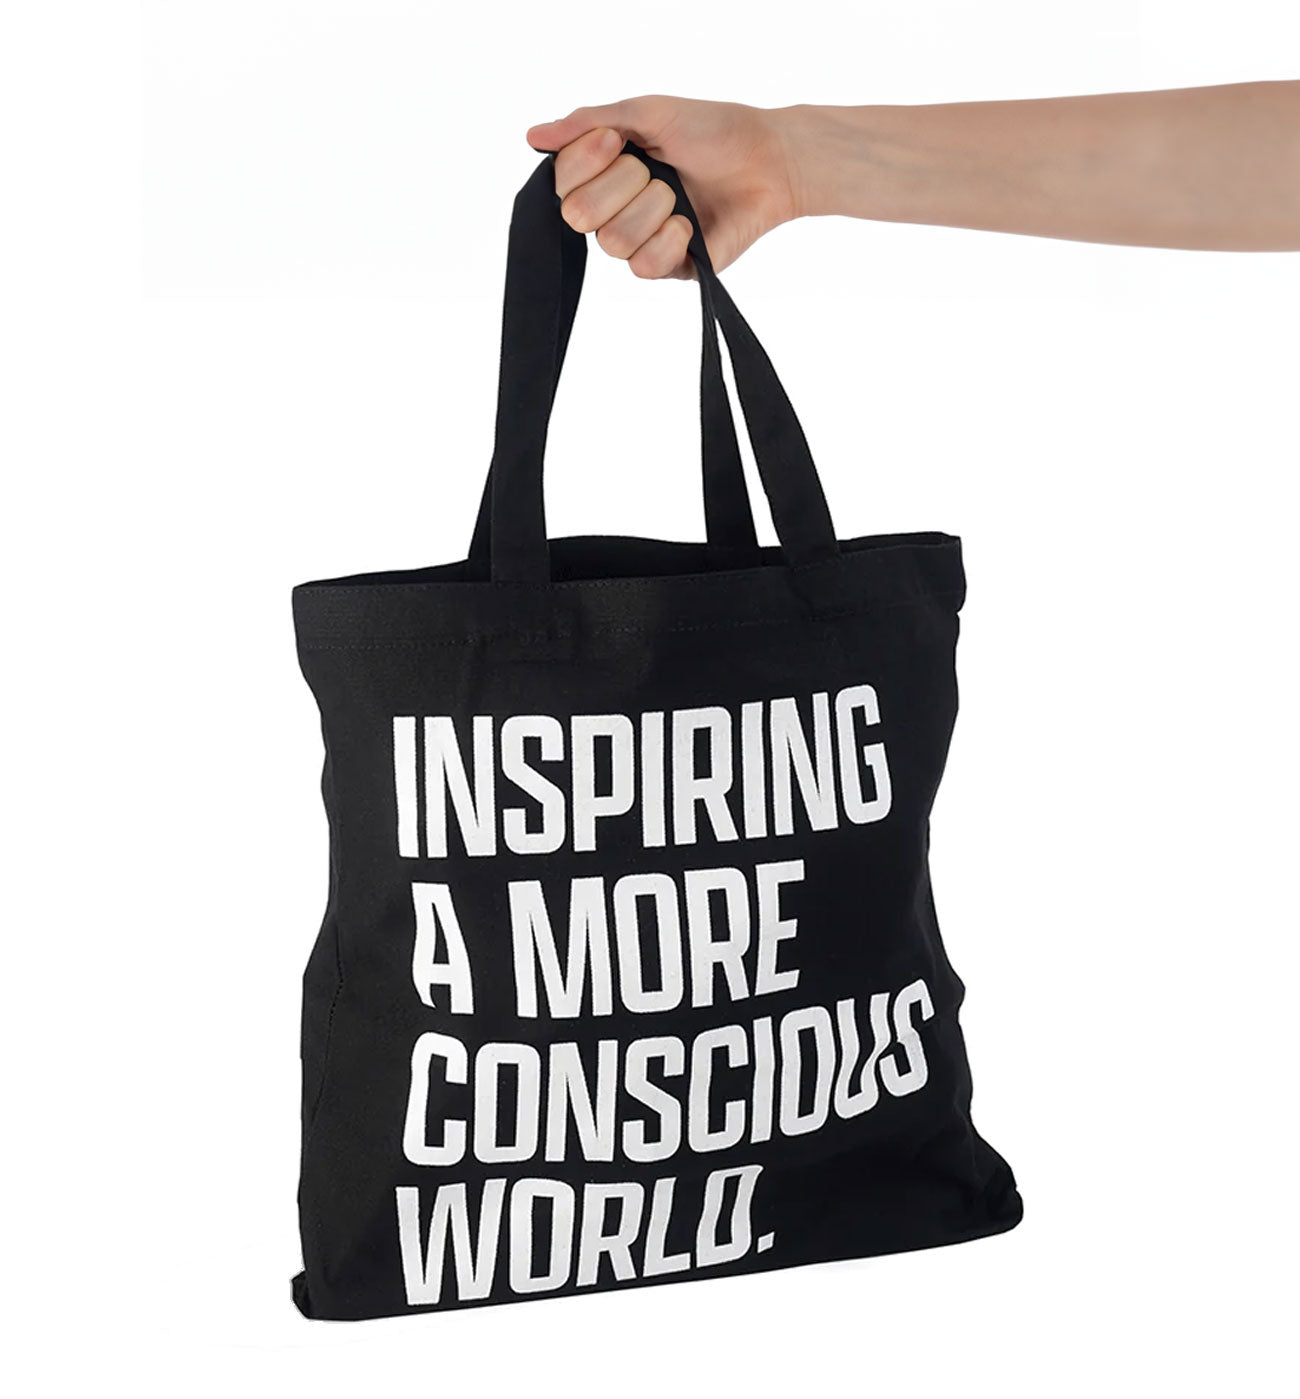 Hand holding "Inspiring a More Conscious World" tote bag.